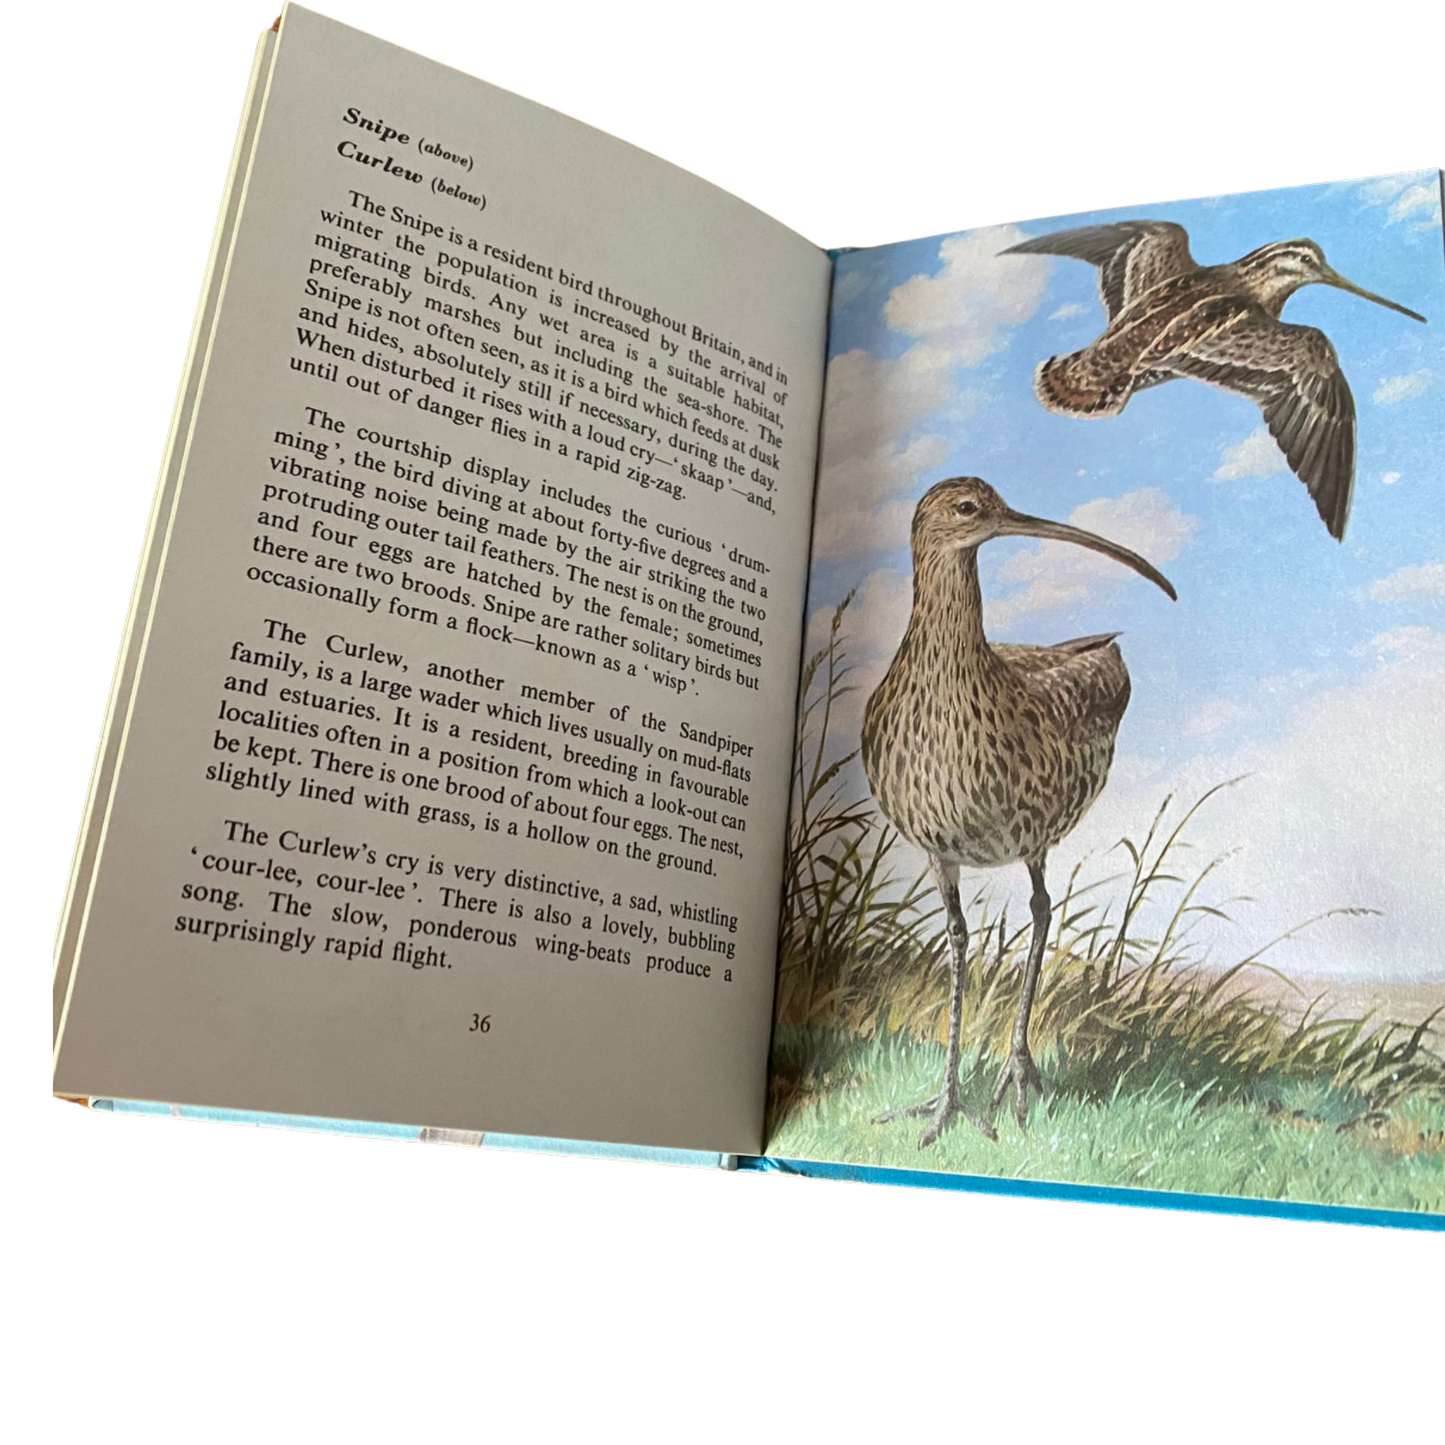 Vintage 1960s ladybird book, Sea and Estuary Birds, Series 536. Great gift idea